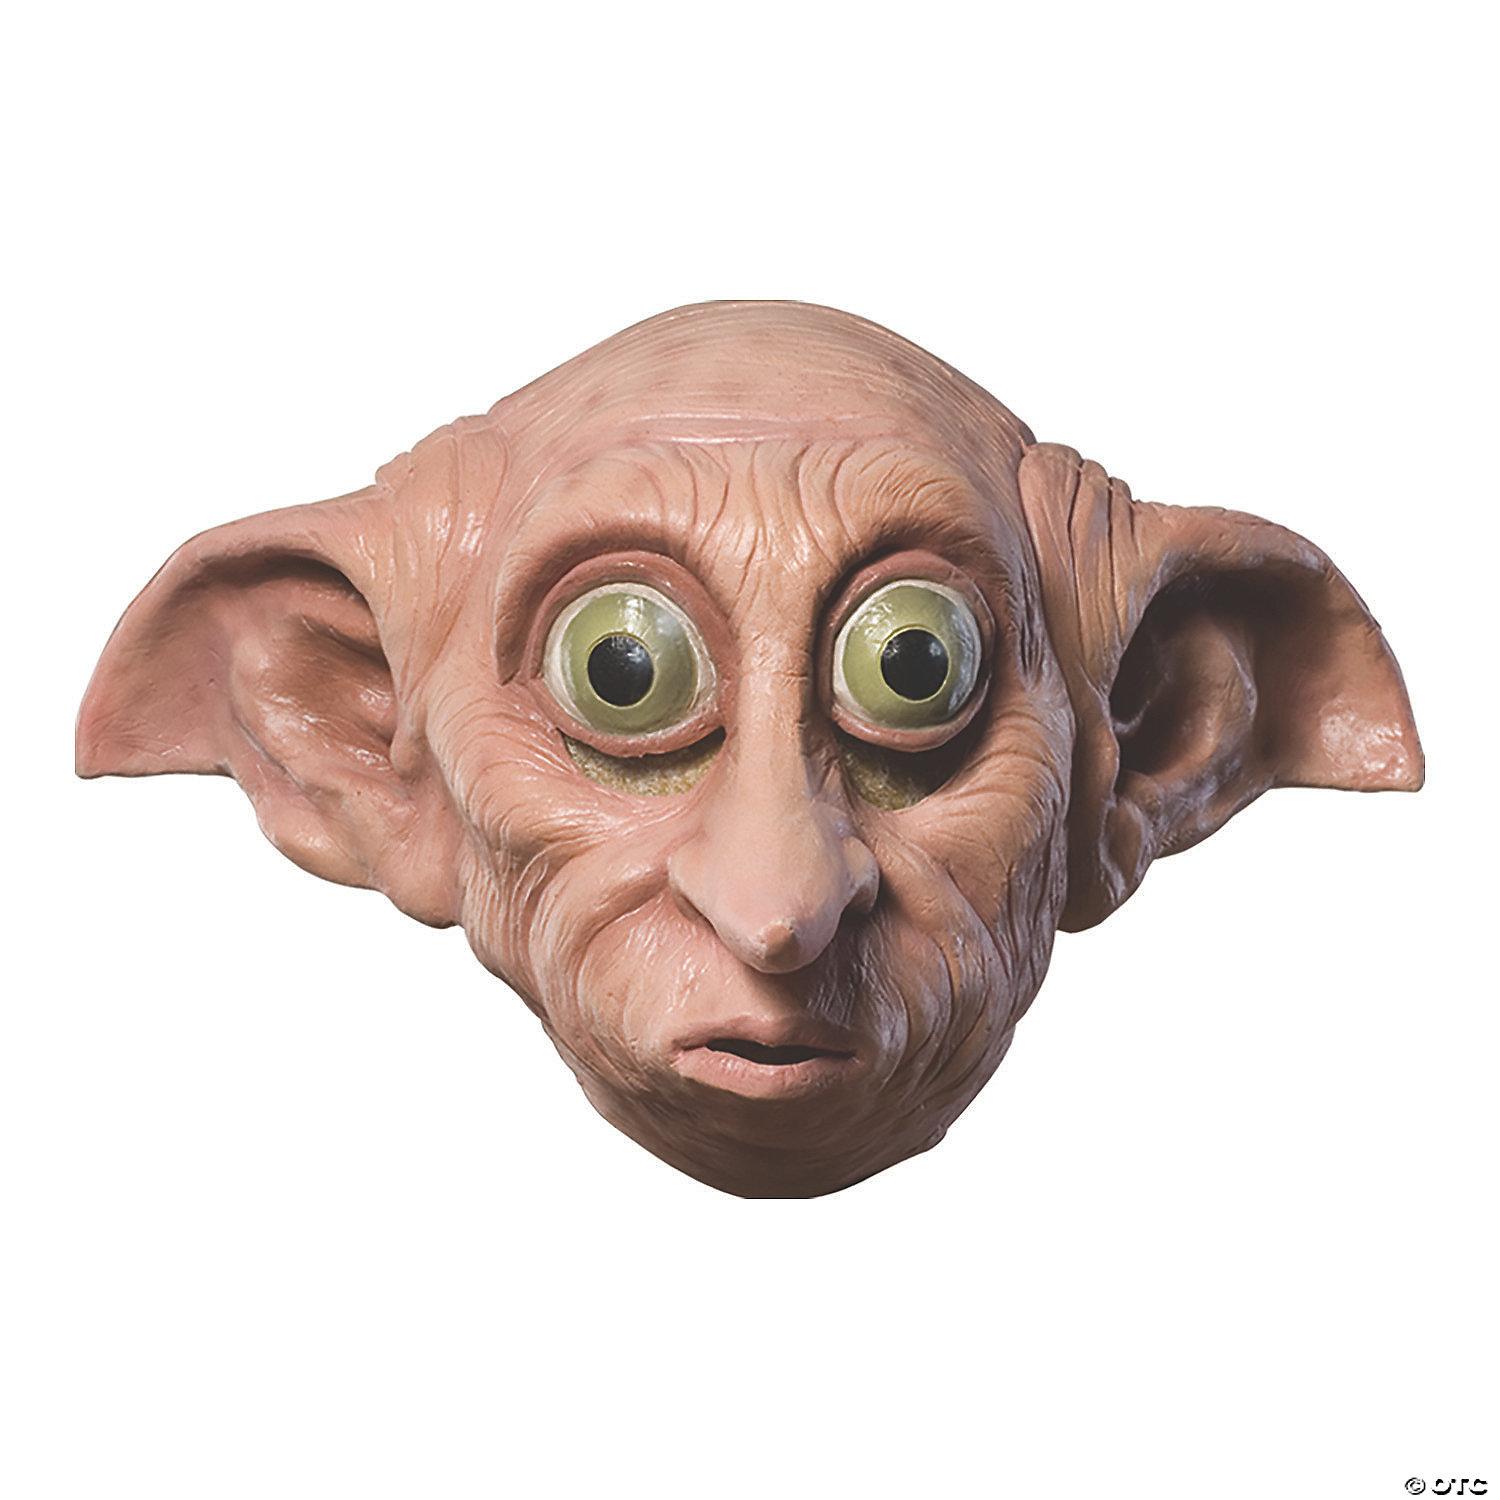 Dobby – Harry Potter